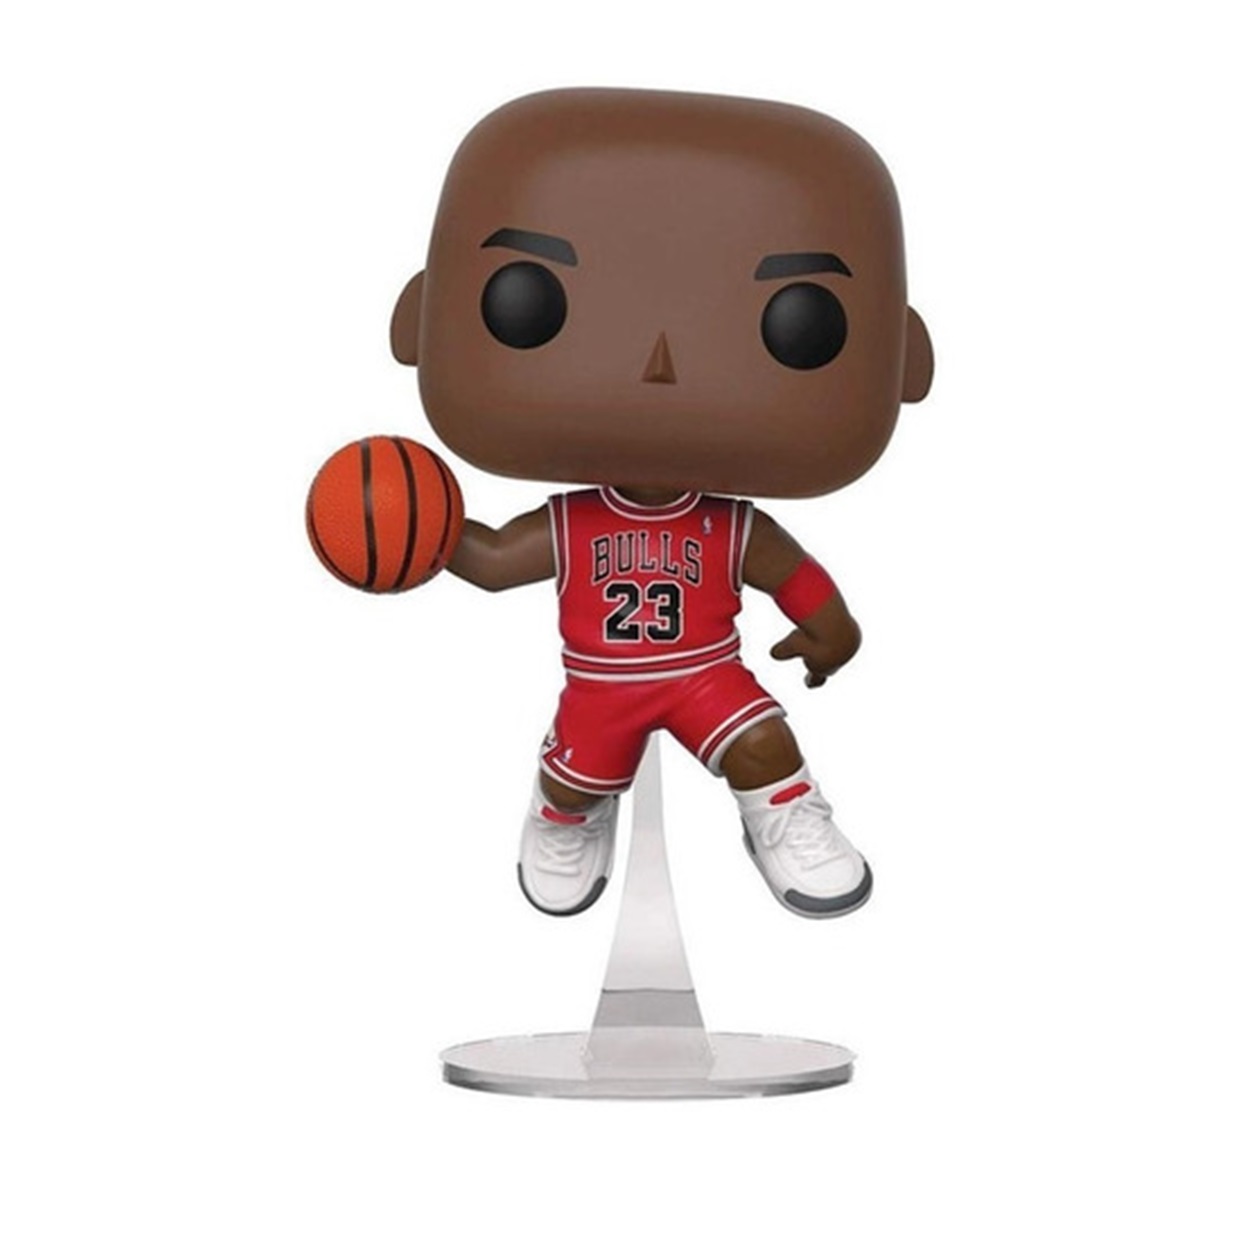 Michael Jordan #54 Figura Chicago Bulls Funko Pop Basketball